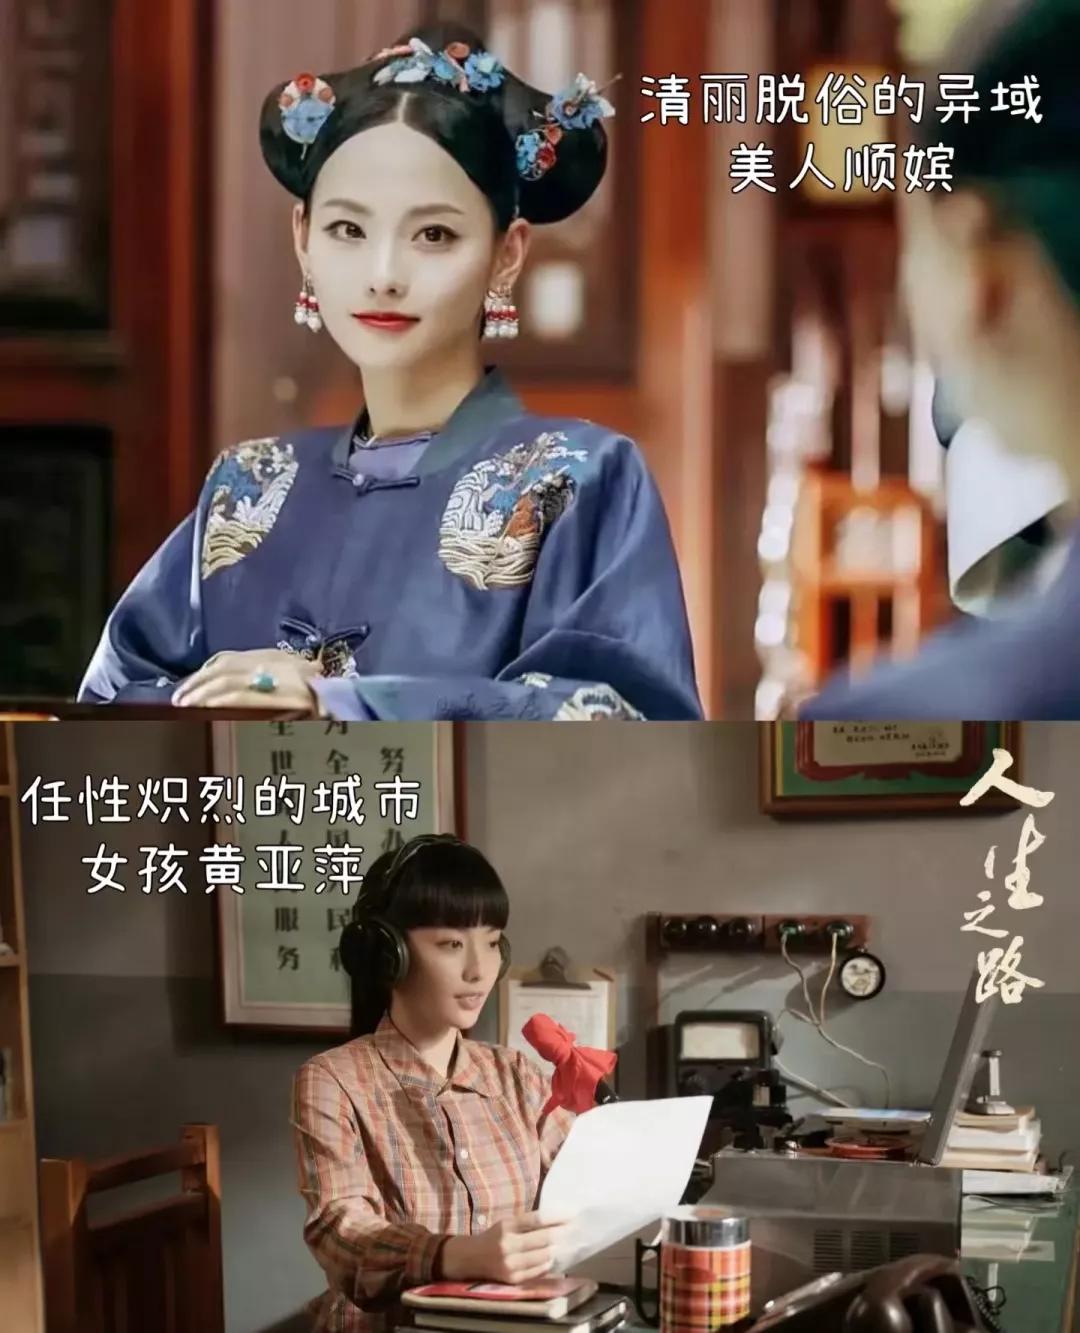 TV series - the road of life, Li Qin, Zhang Jiani, two fragrant ...